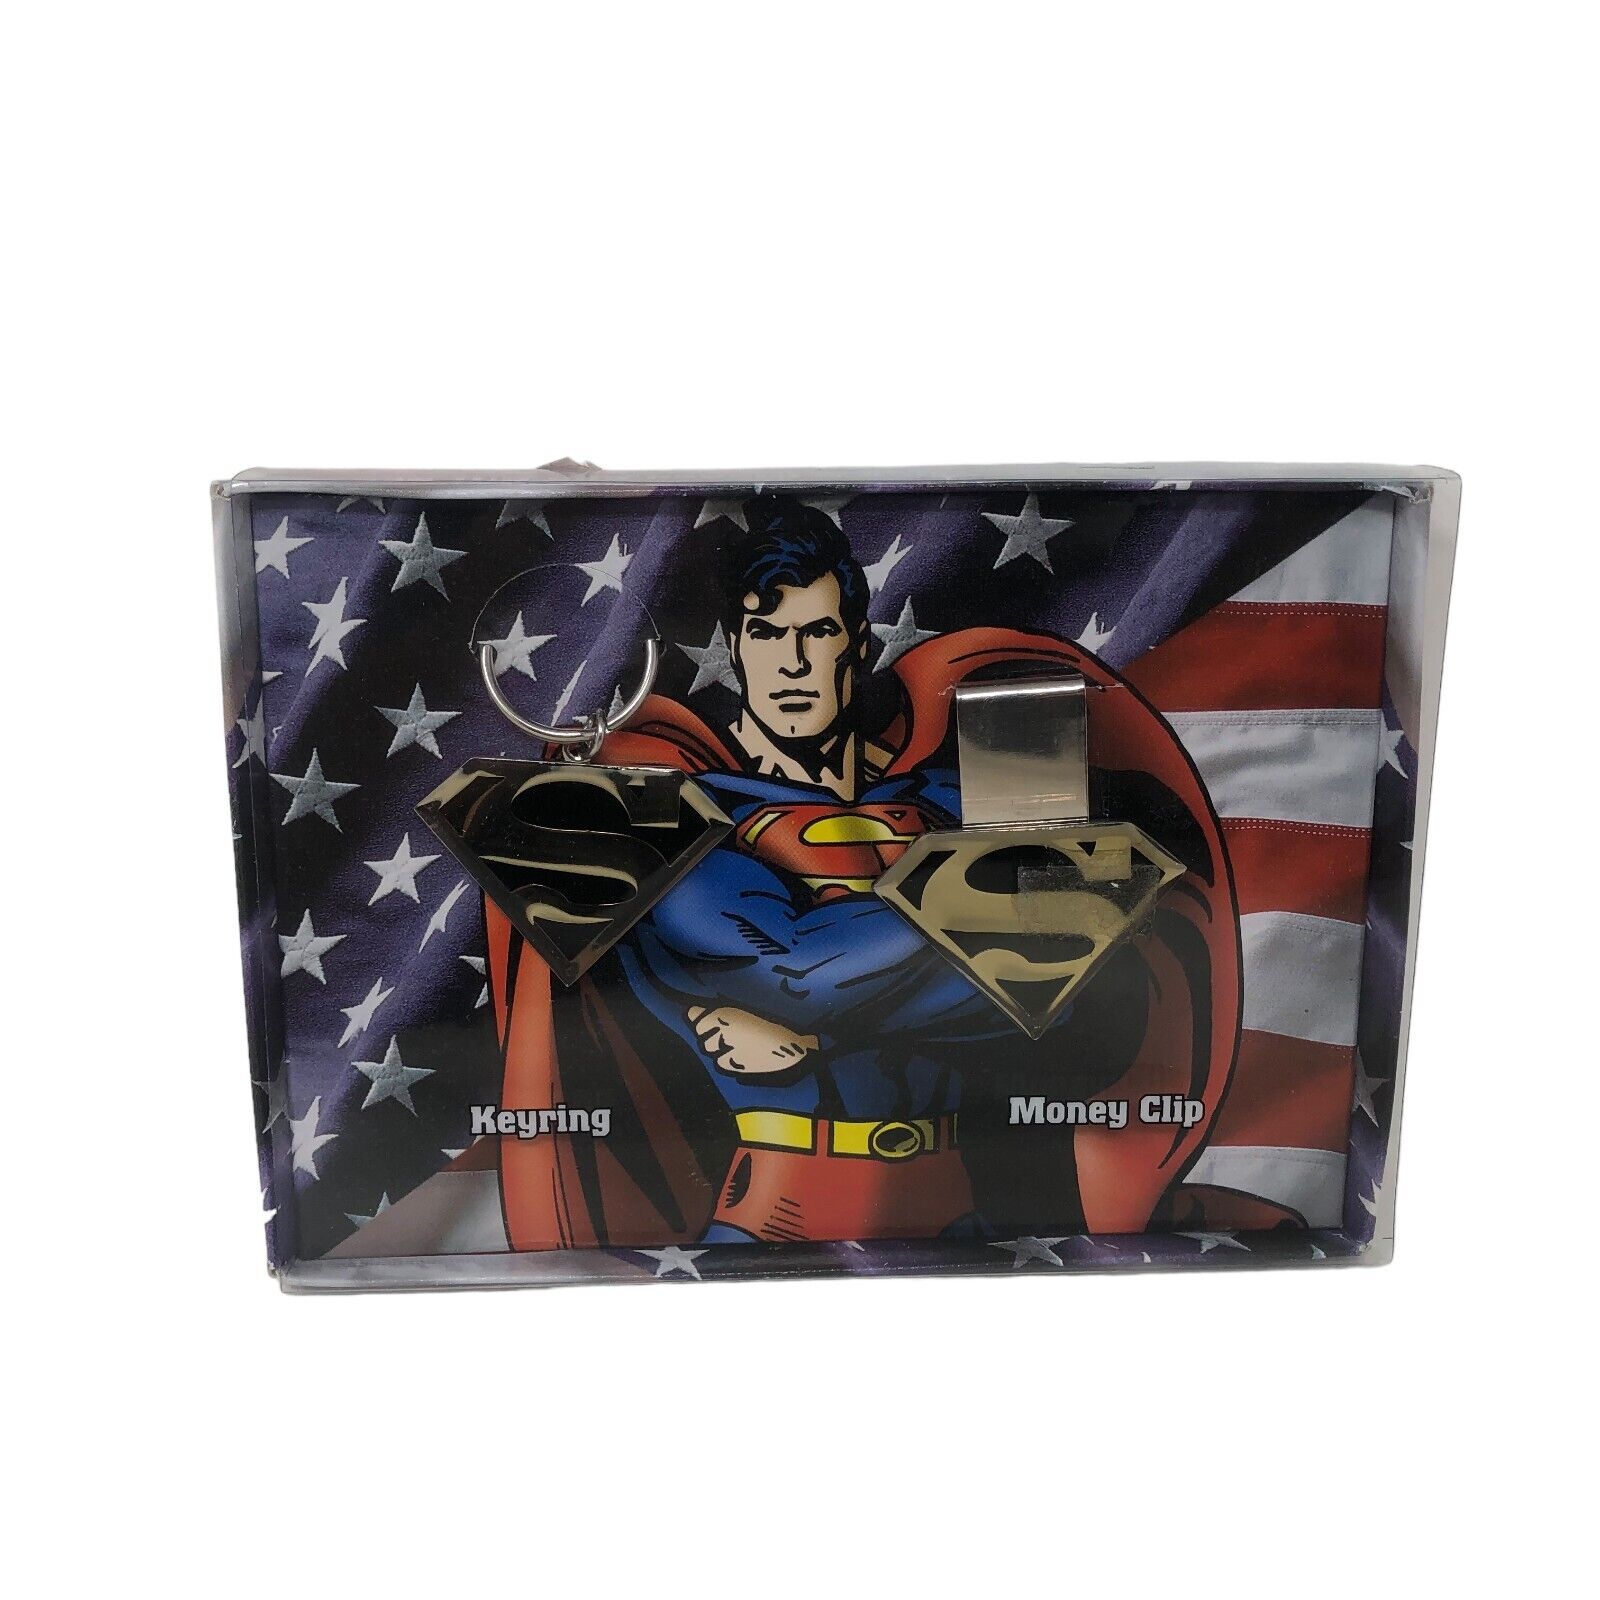 VTG NIP 2001 Superman Keyring & Money Clip Gift Set from the Warner Bros. Store